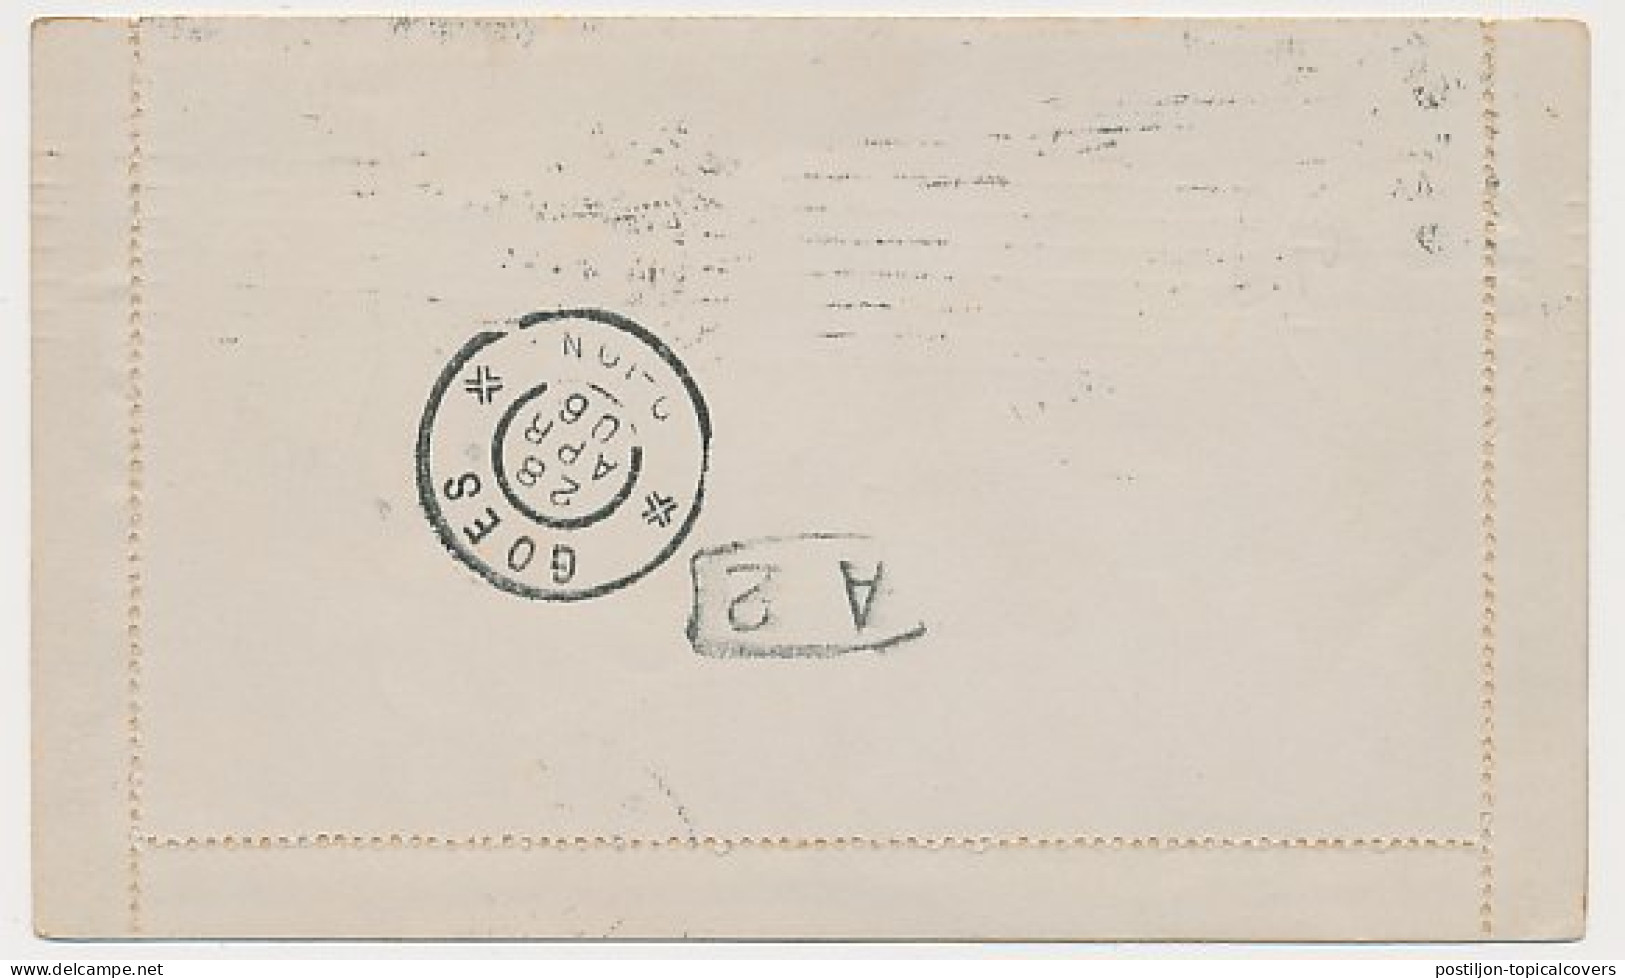 Postblad G. 5 Y S Gravenhage - Goes 1903 - Interi Postali